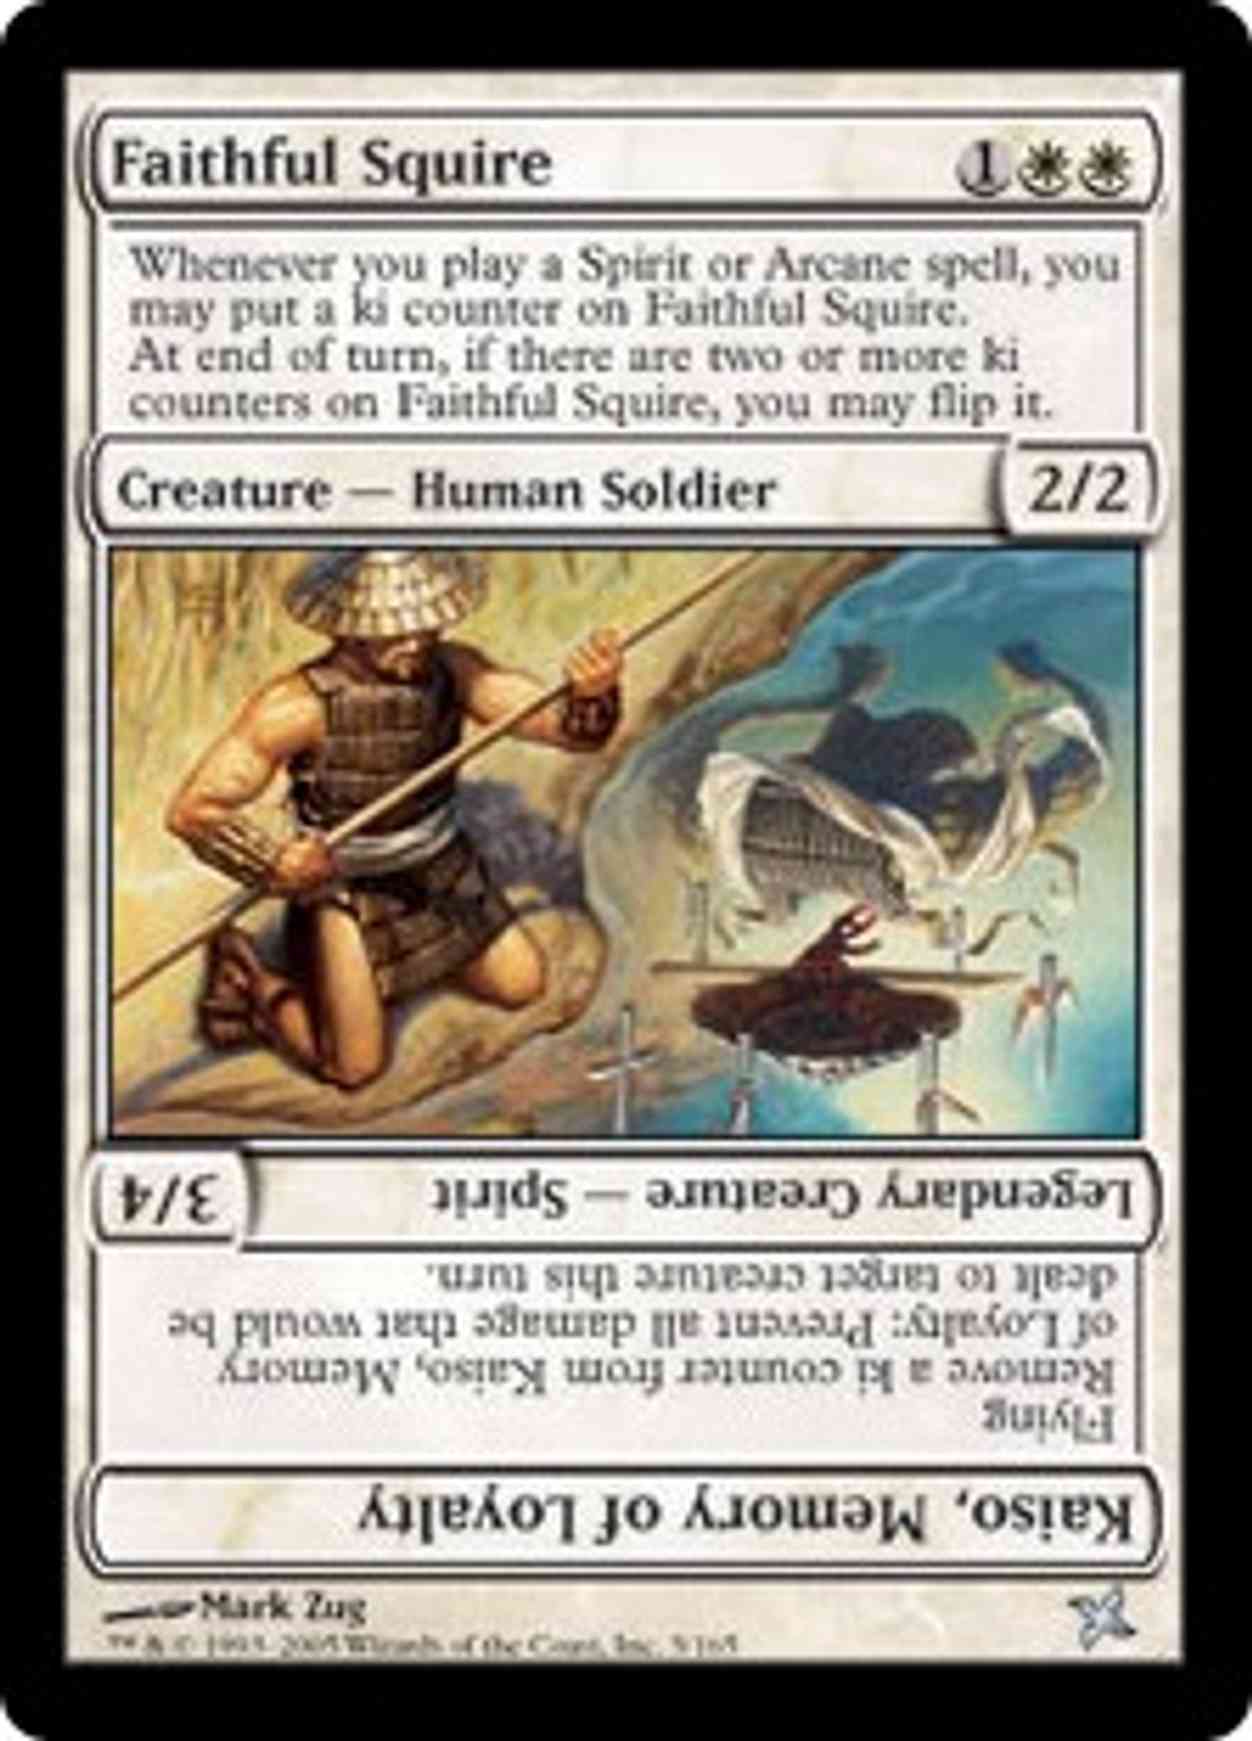 Faithful Squire magic card front